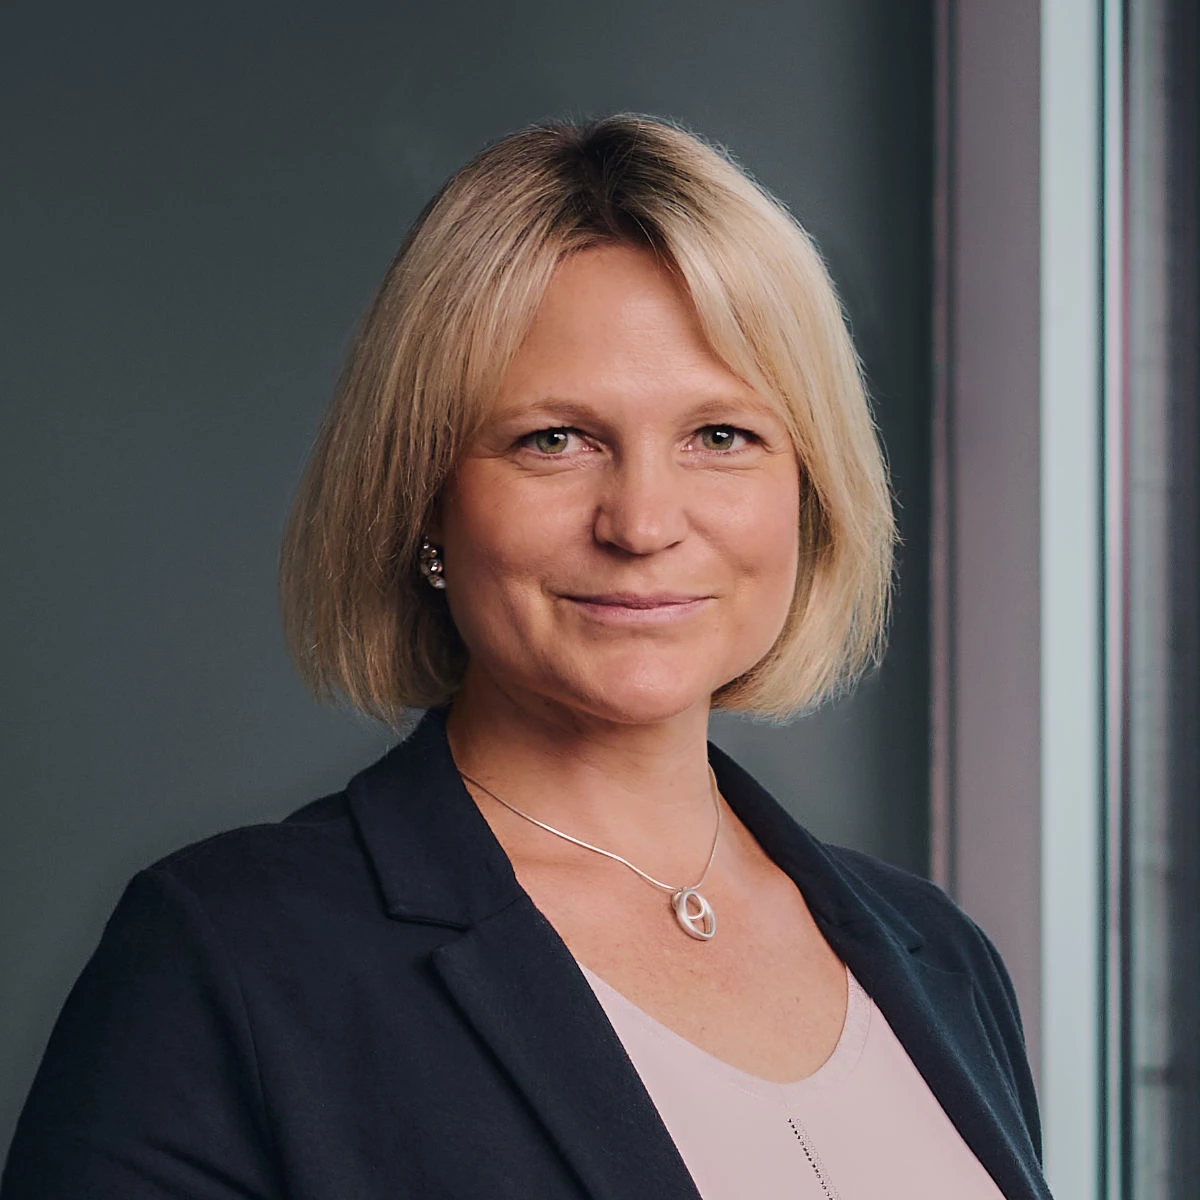 Annette Kröger, CEO of North & Central Europe at Allianz Real Estate